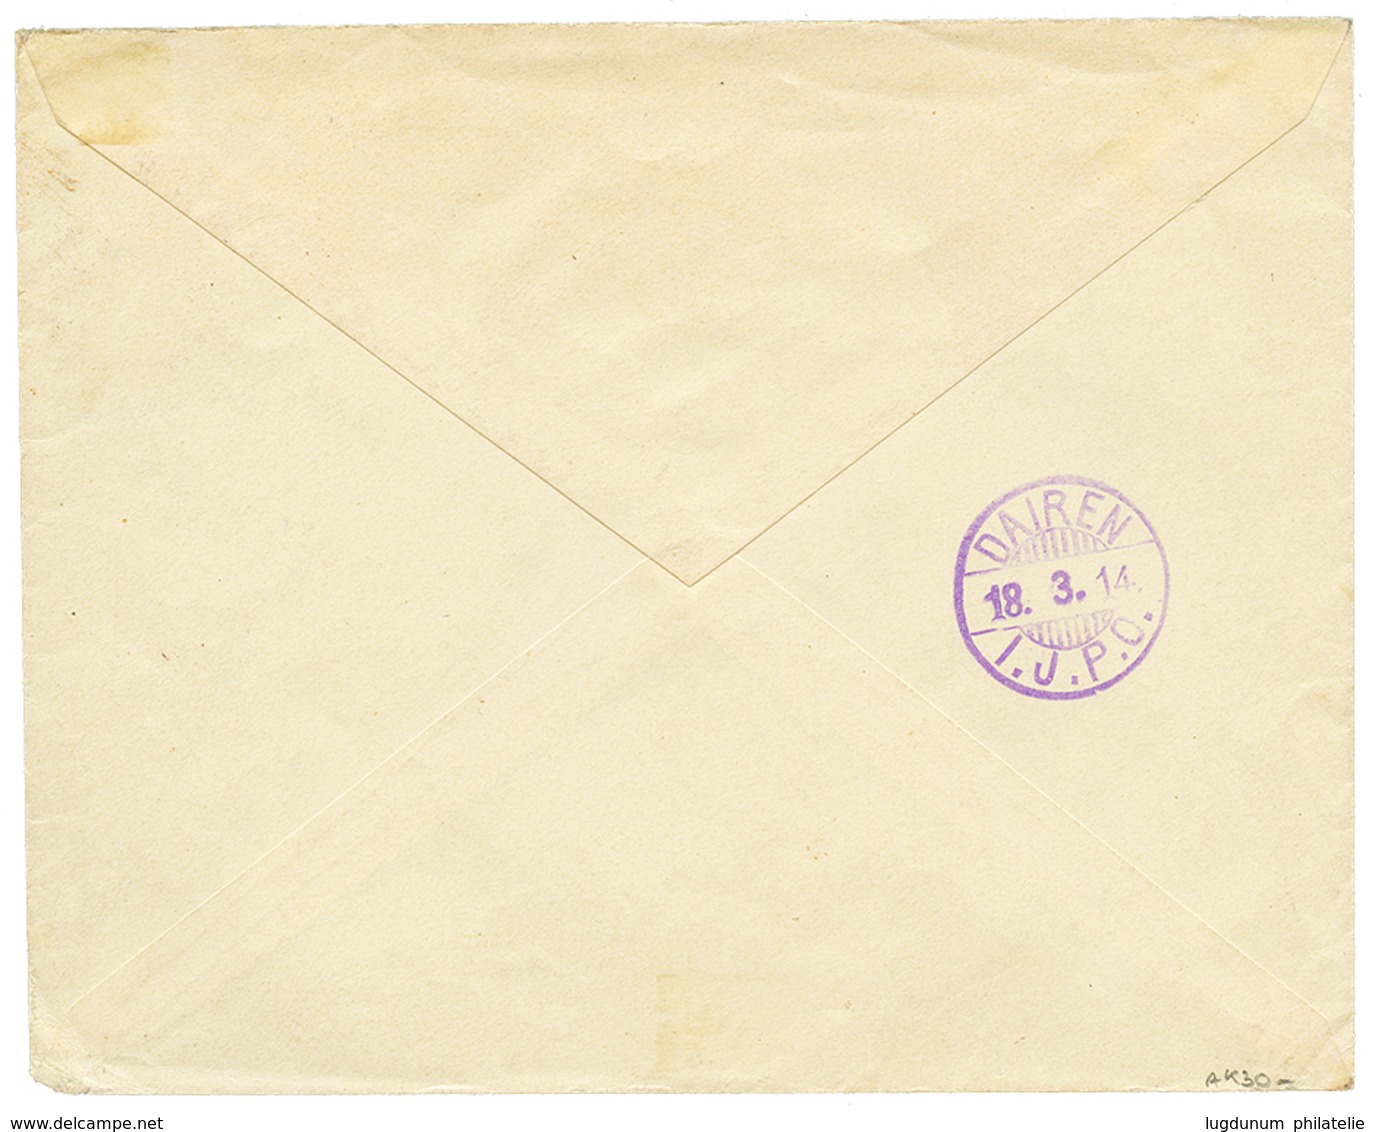 587 KIAUTSCHOU - DAIREN IJPO : 1914 4c Canc. SEEPOST + PAQUEBOT + 30Ctms Tax Marking On Envelope To GERMANY. Verso, DAIR - Kiautchou